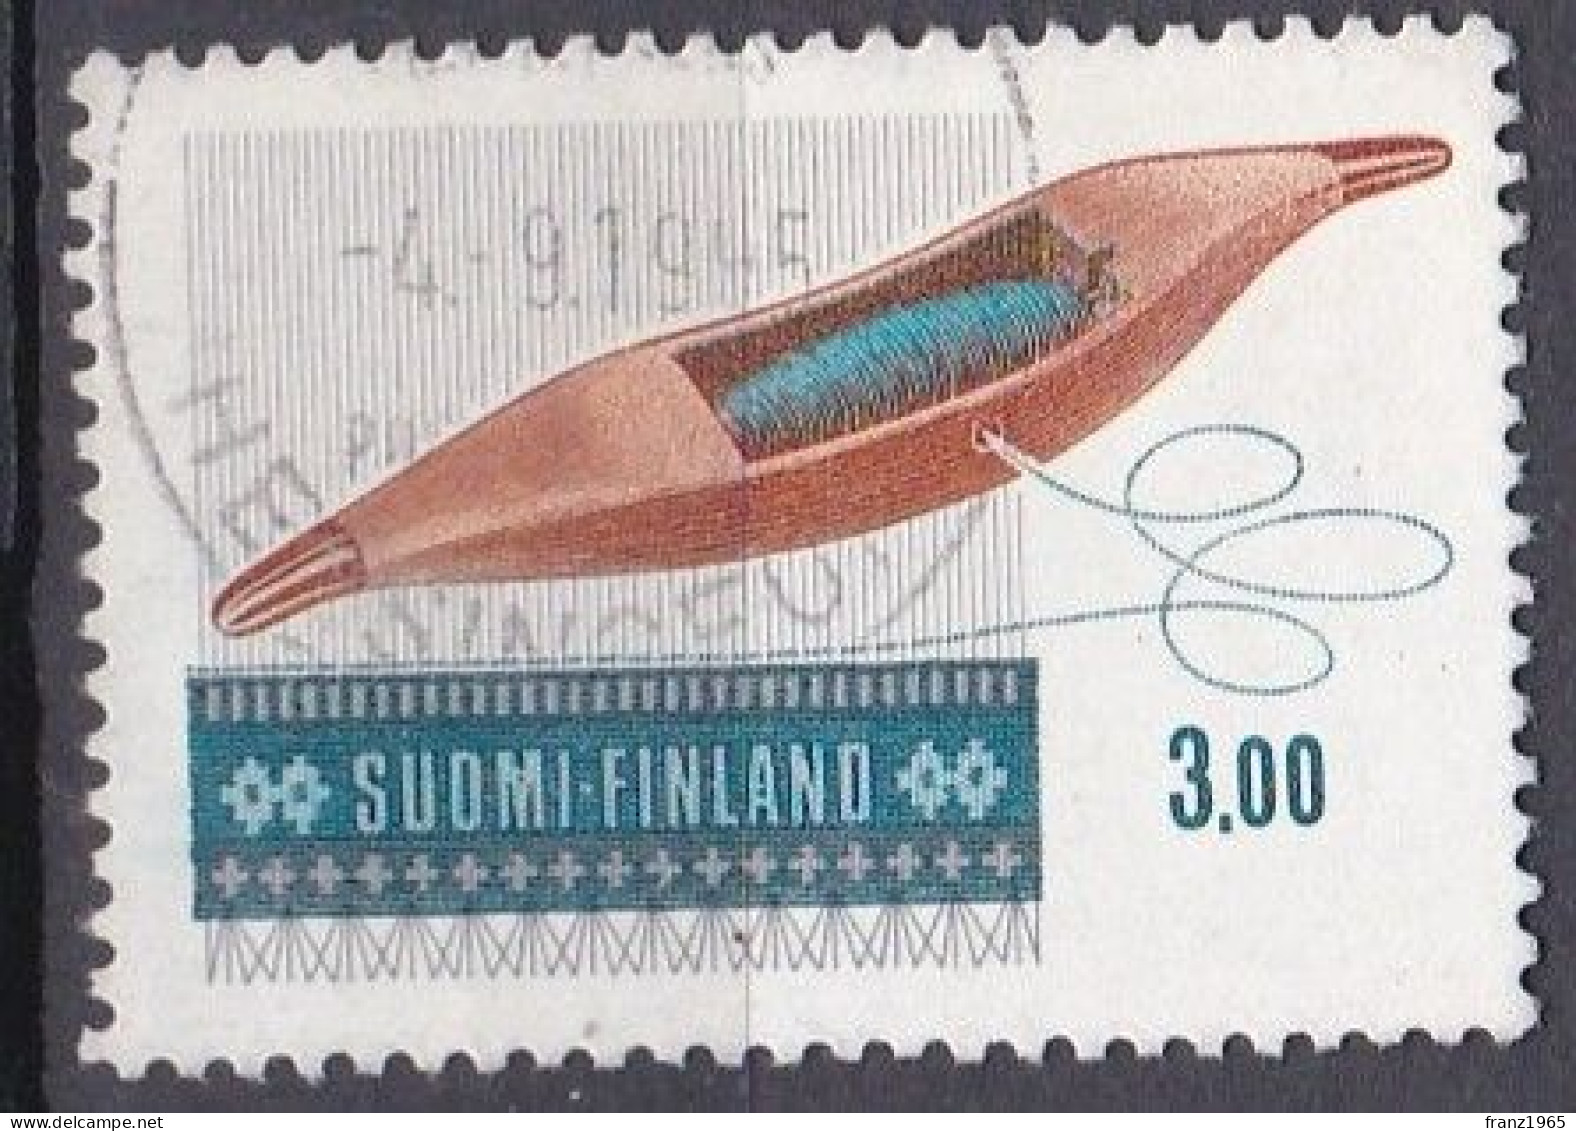 Folk Art, Weaving Shuttle Drive - 1979 - Used Stamps